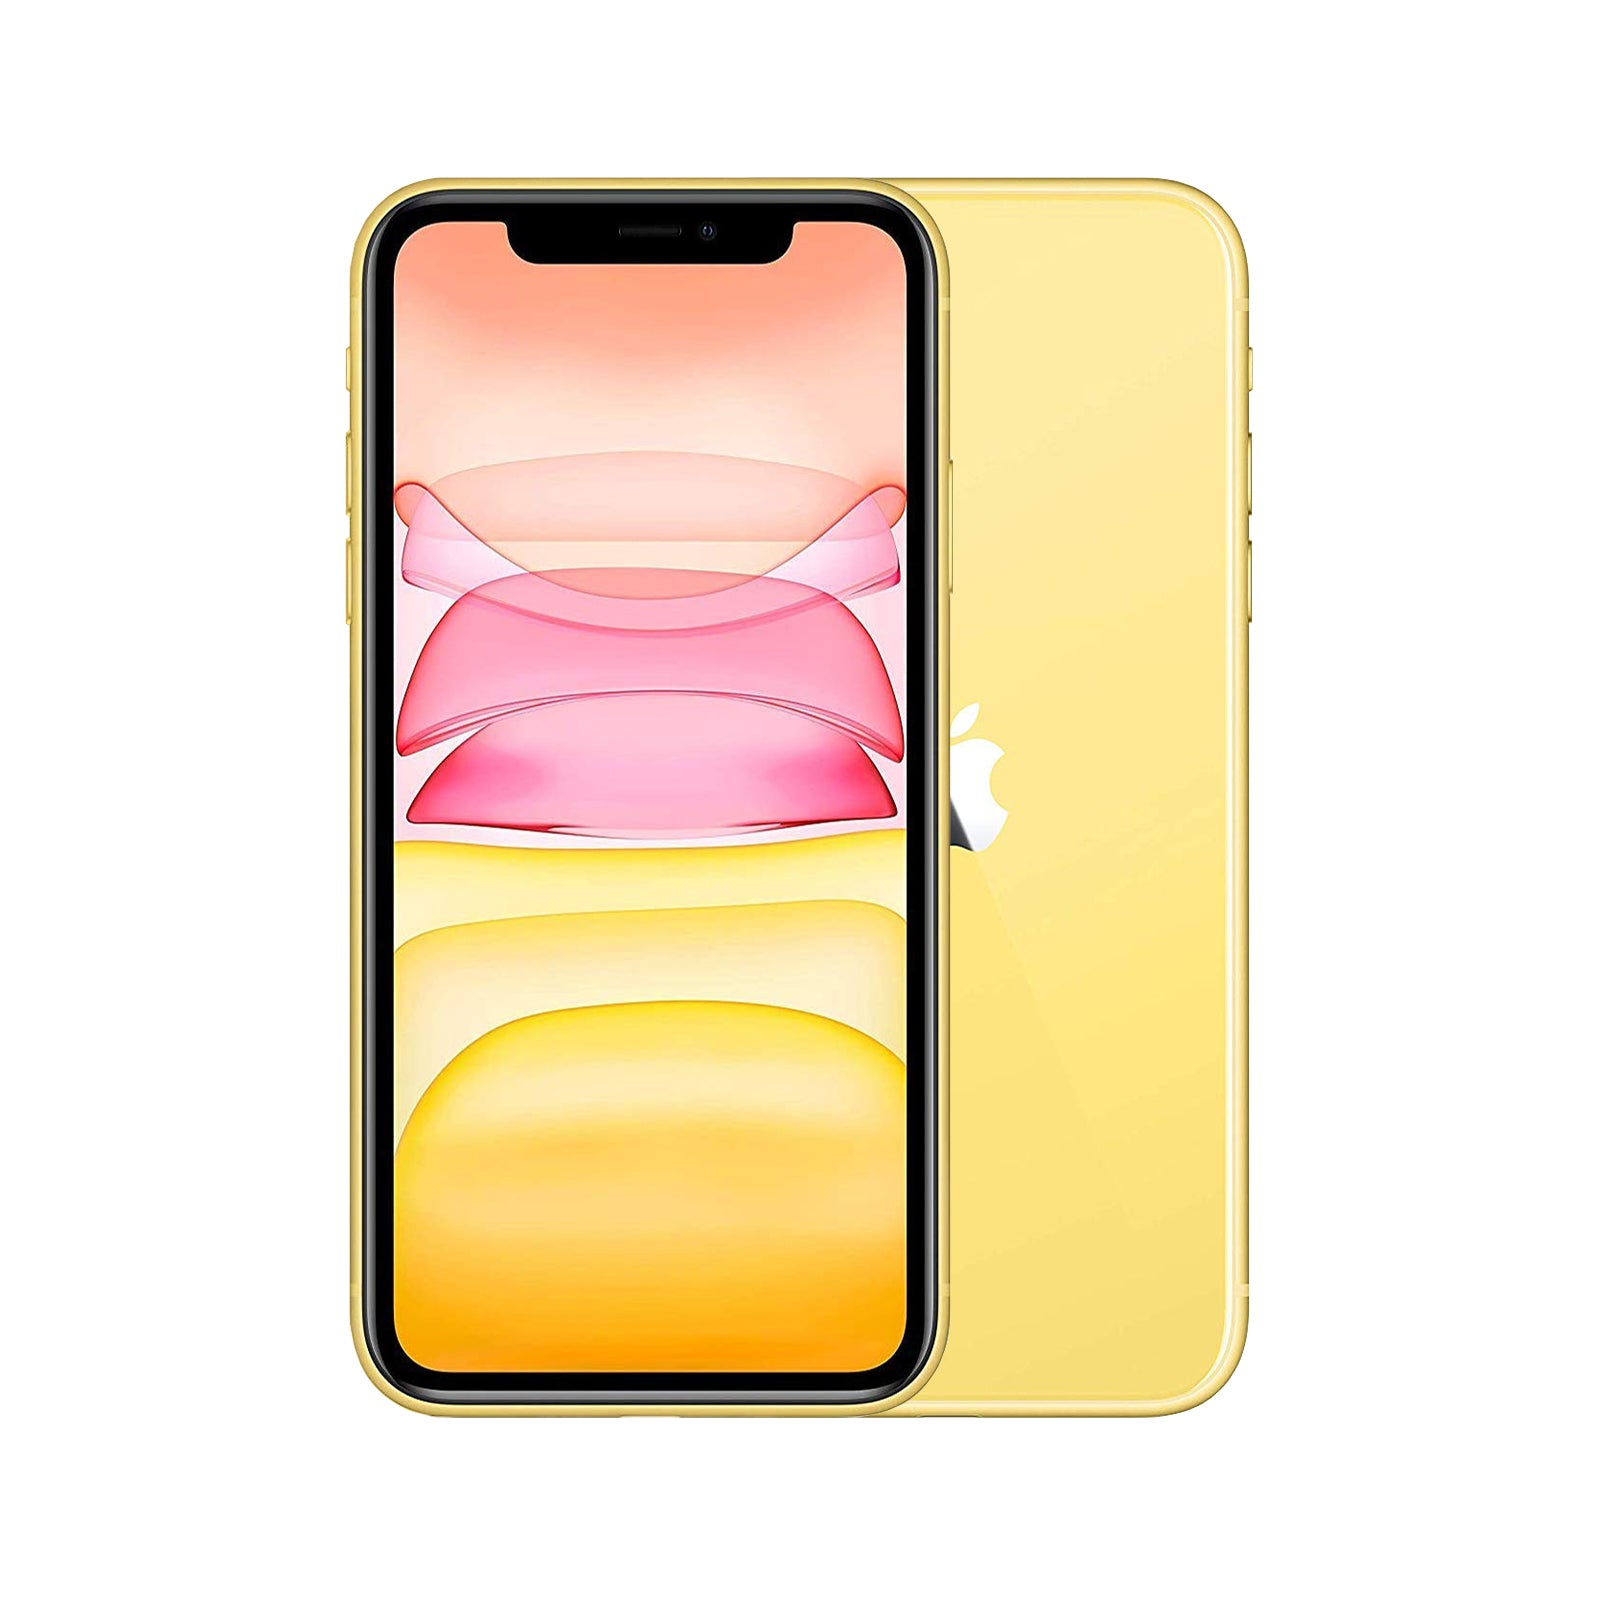 Apple iPhone 11 128GB Yellow - Very Good - Refurbished